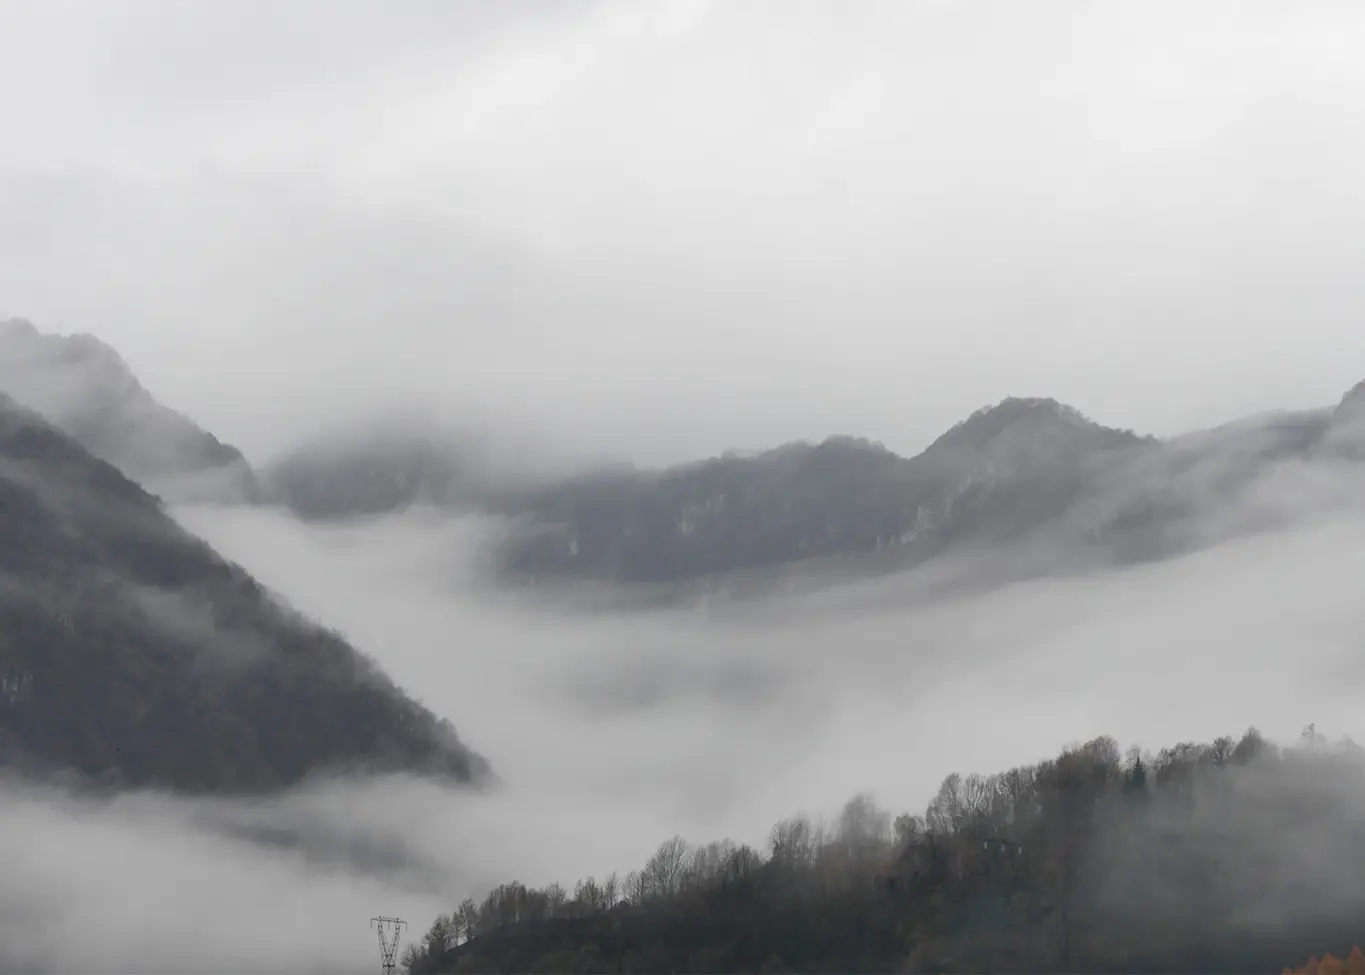 Nebelschwaden nach intensivem Herbstregen in den Alpen bei Bergamo.